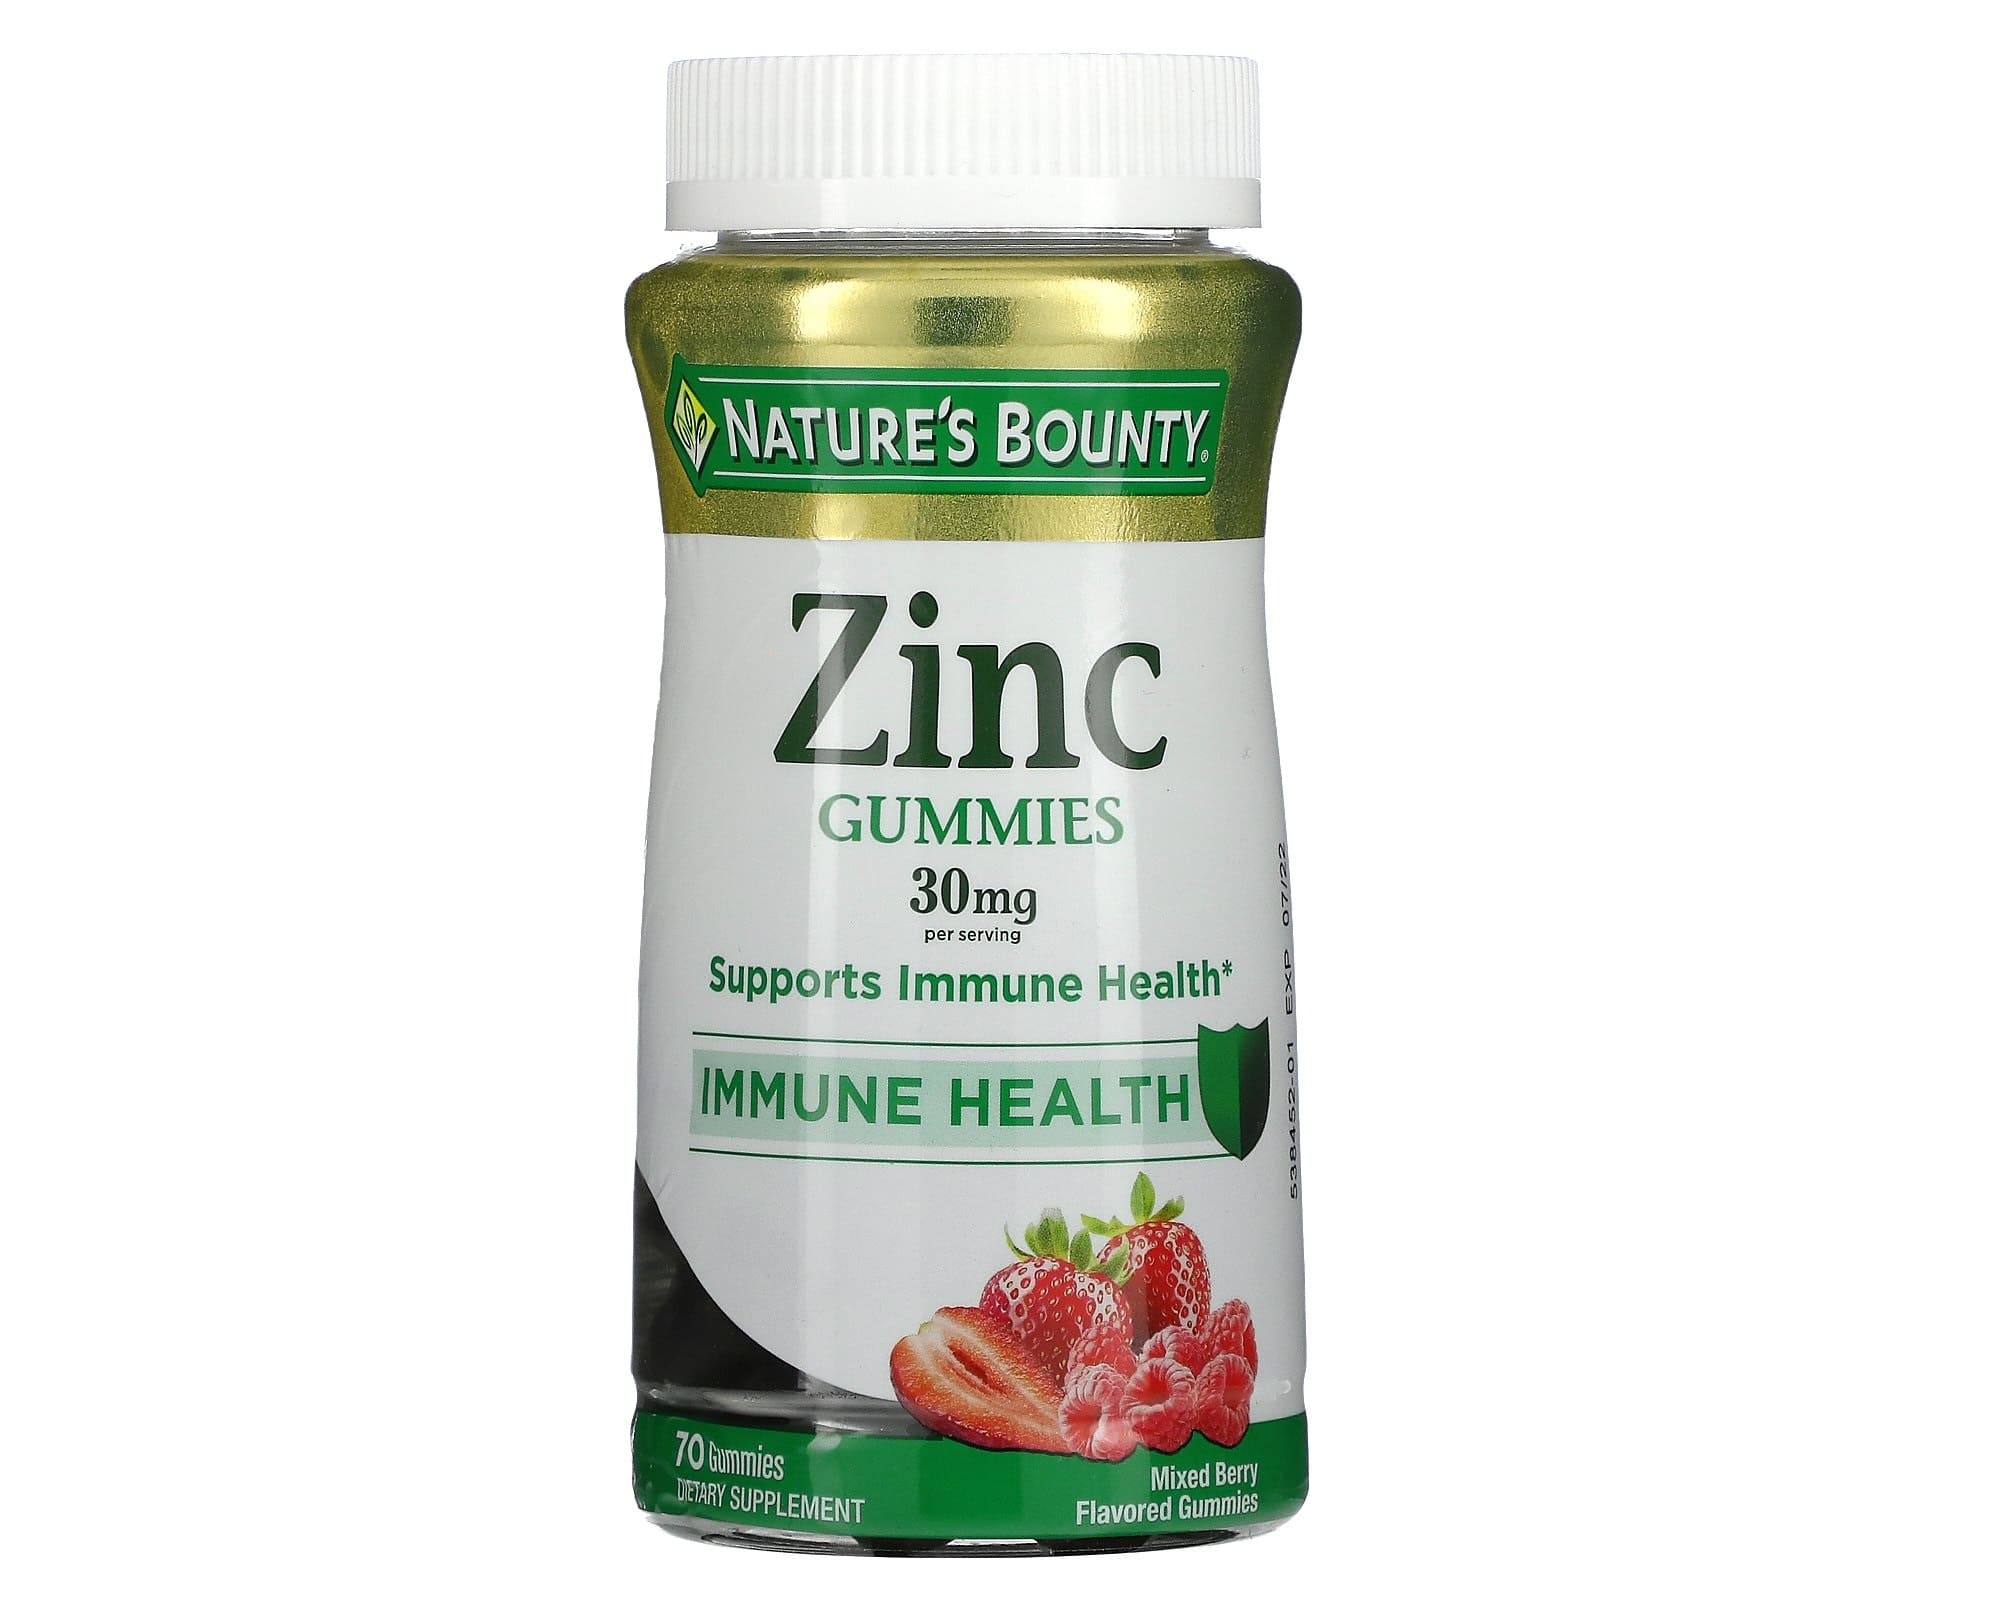 Nature's Bounty Zinc gummies